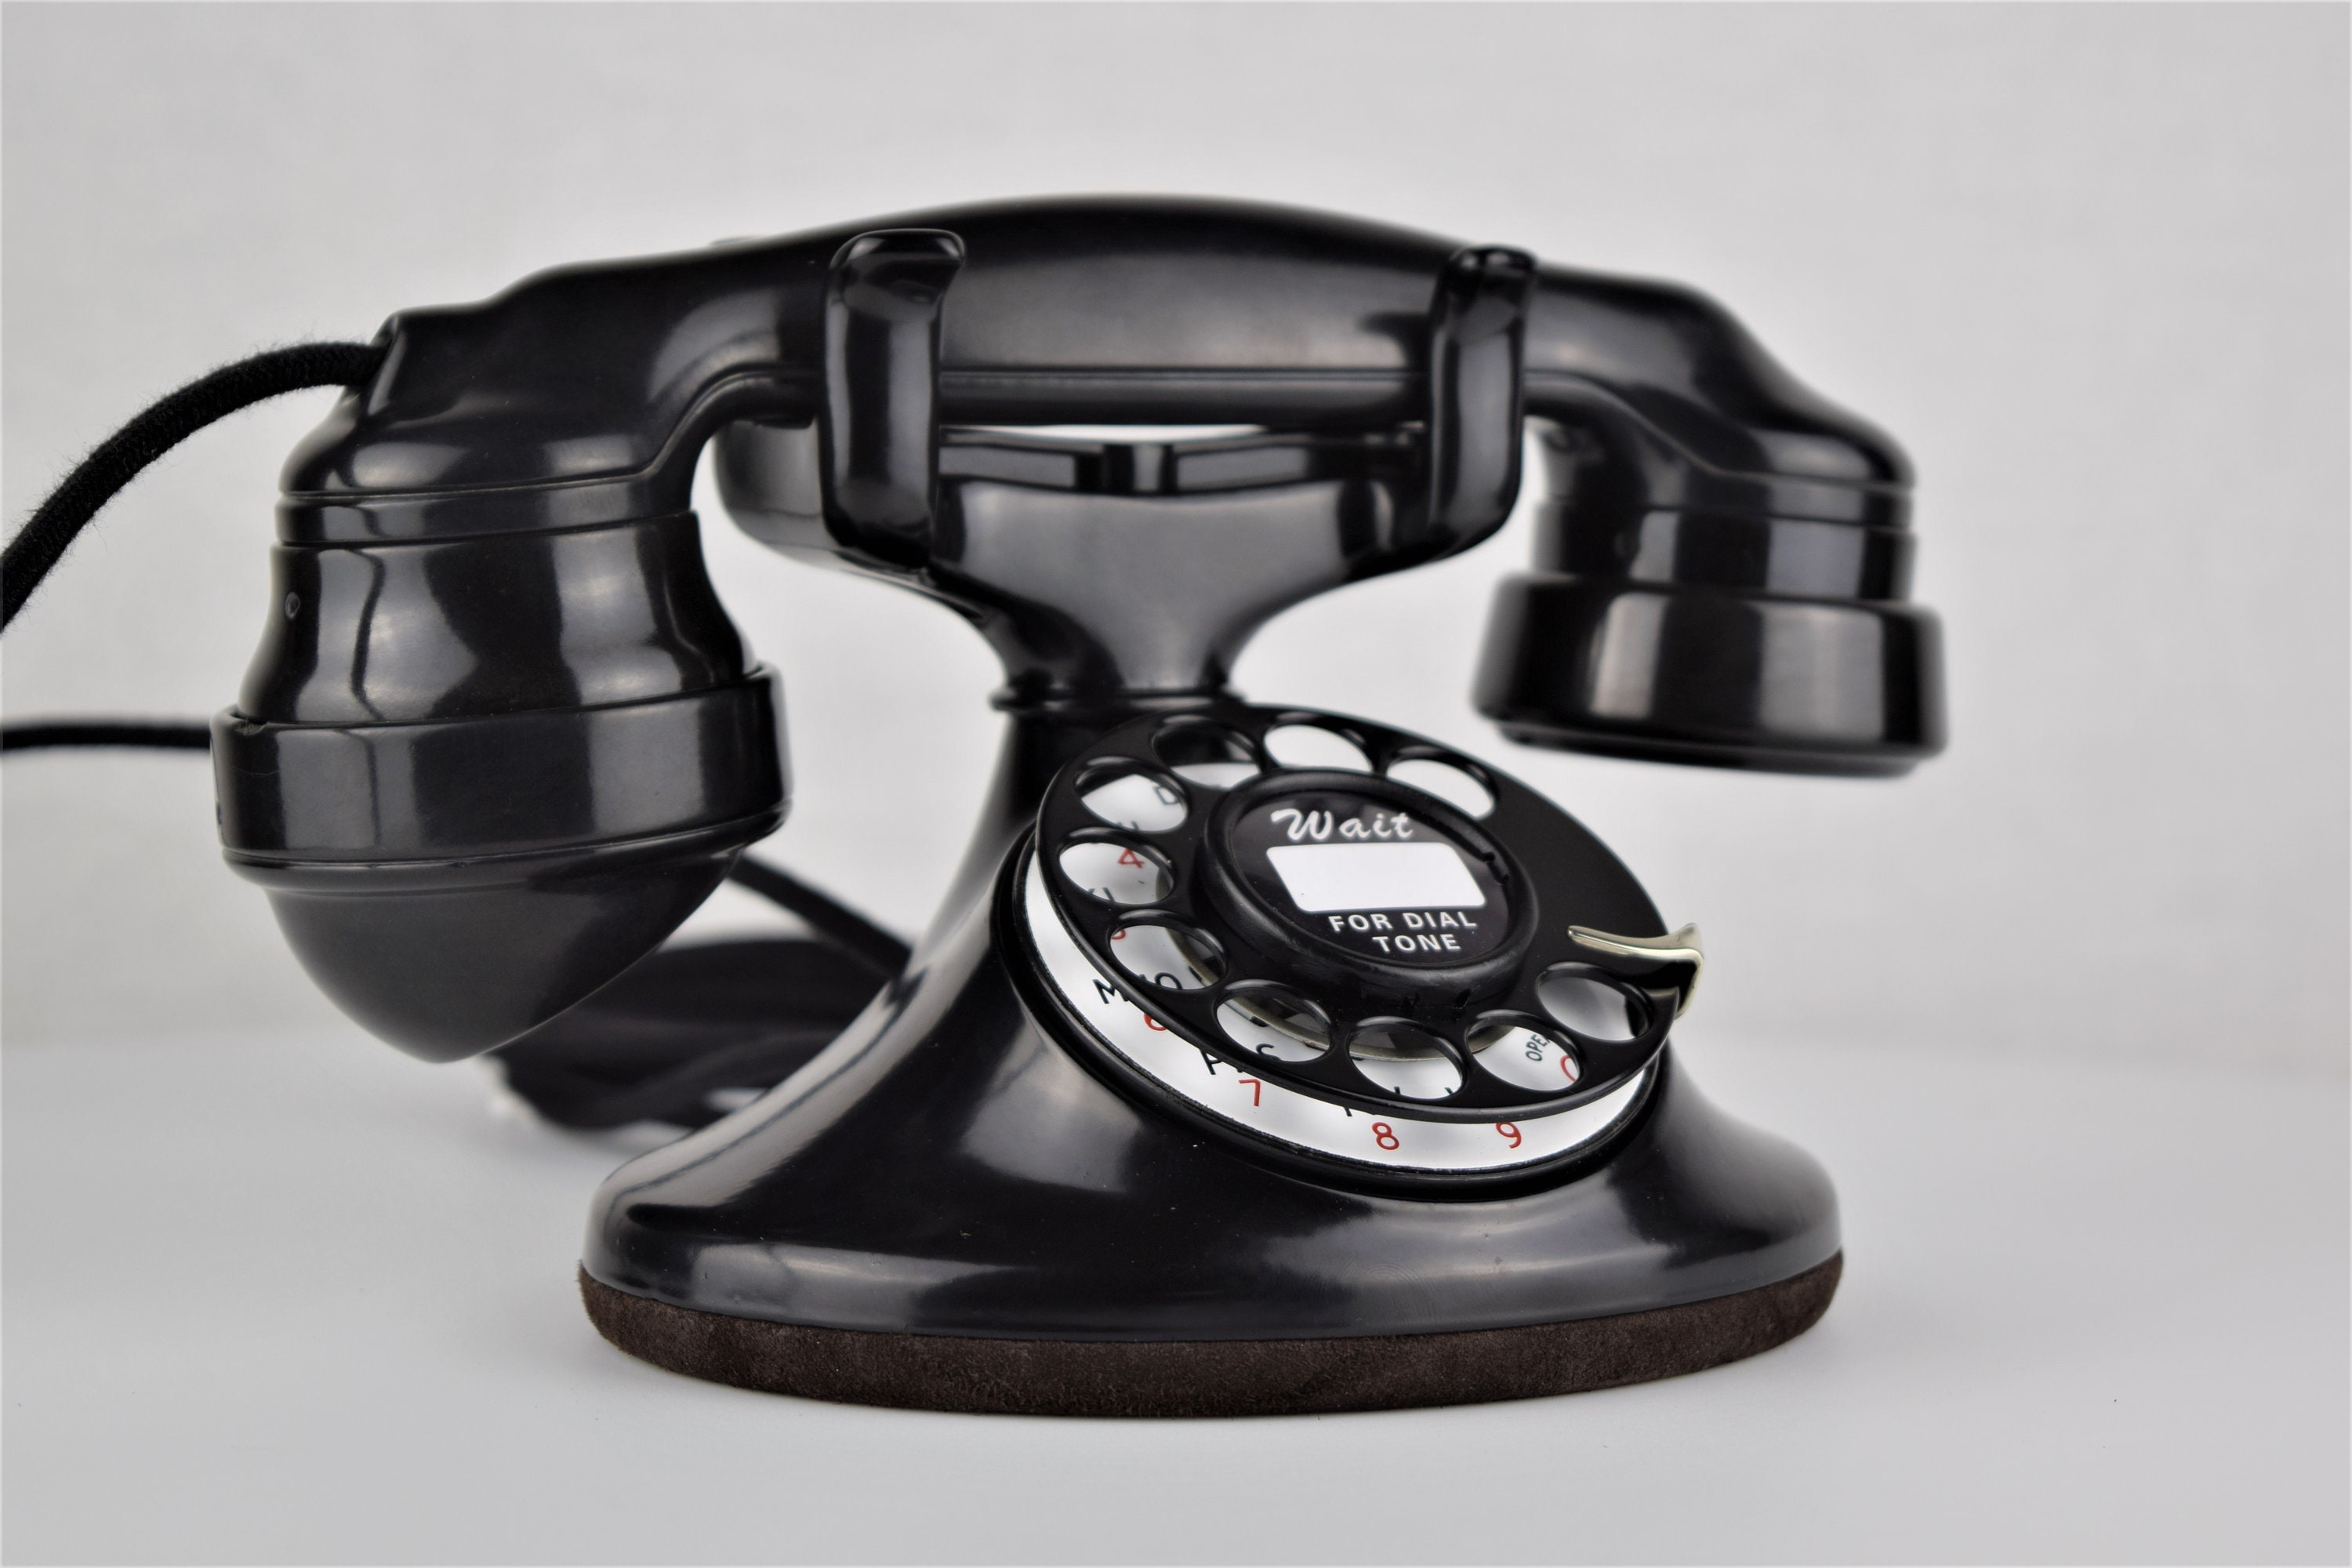 Collection телефон. Телефон Western Electric 302. Телефон 1940. Дисковый телефон Western Electric 500 (1949). Телефон коллекционный.